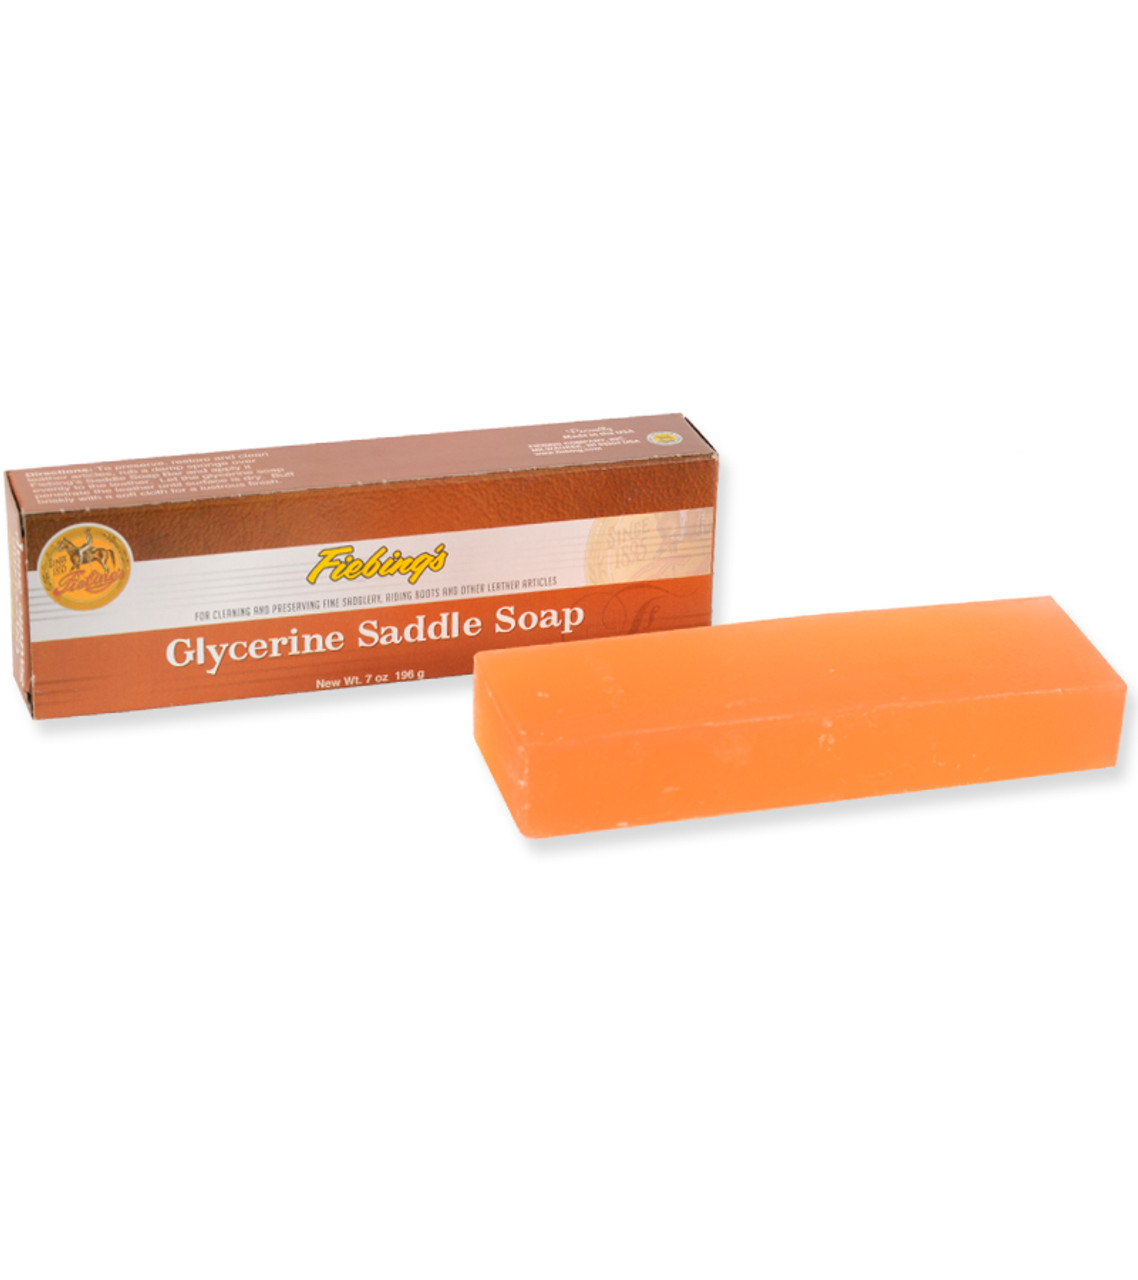 Fiebing's Glycerine Saddle Soap 7 oz.